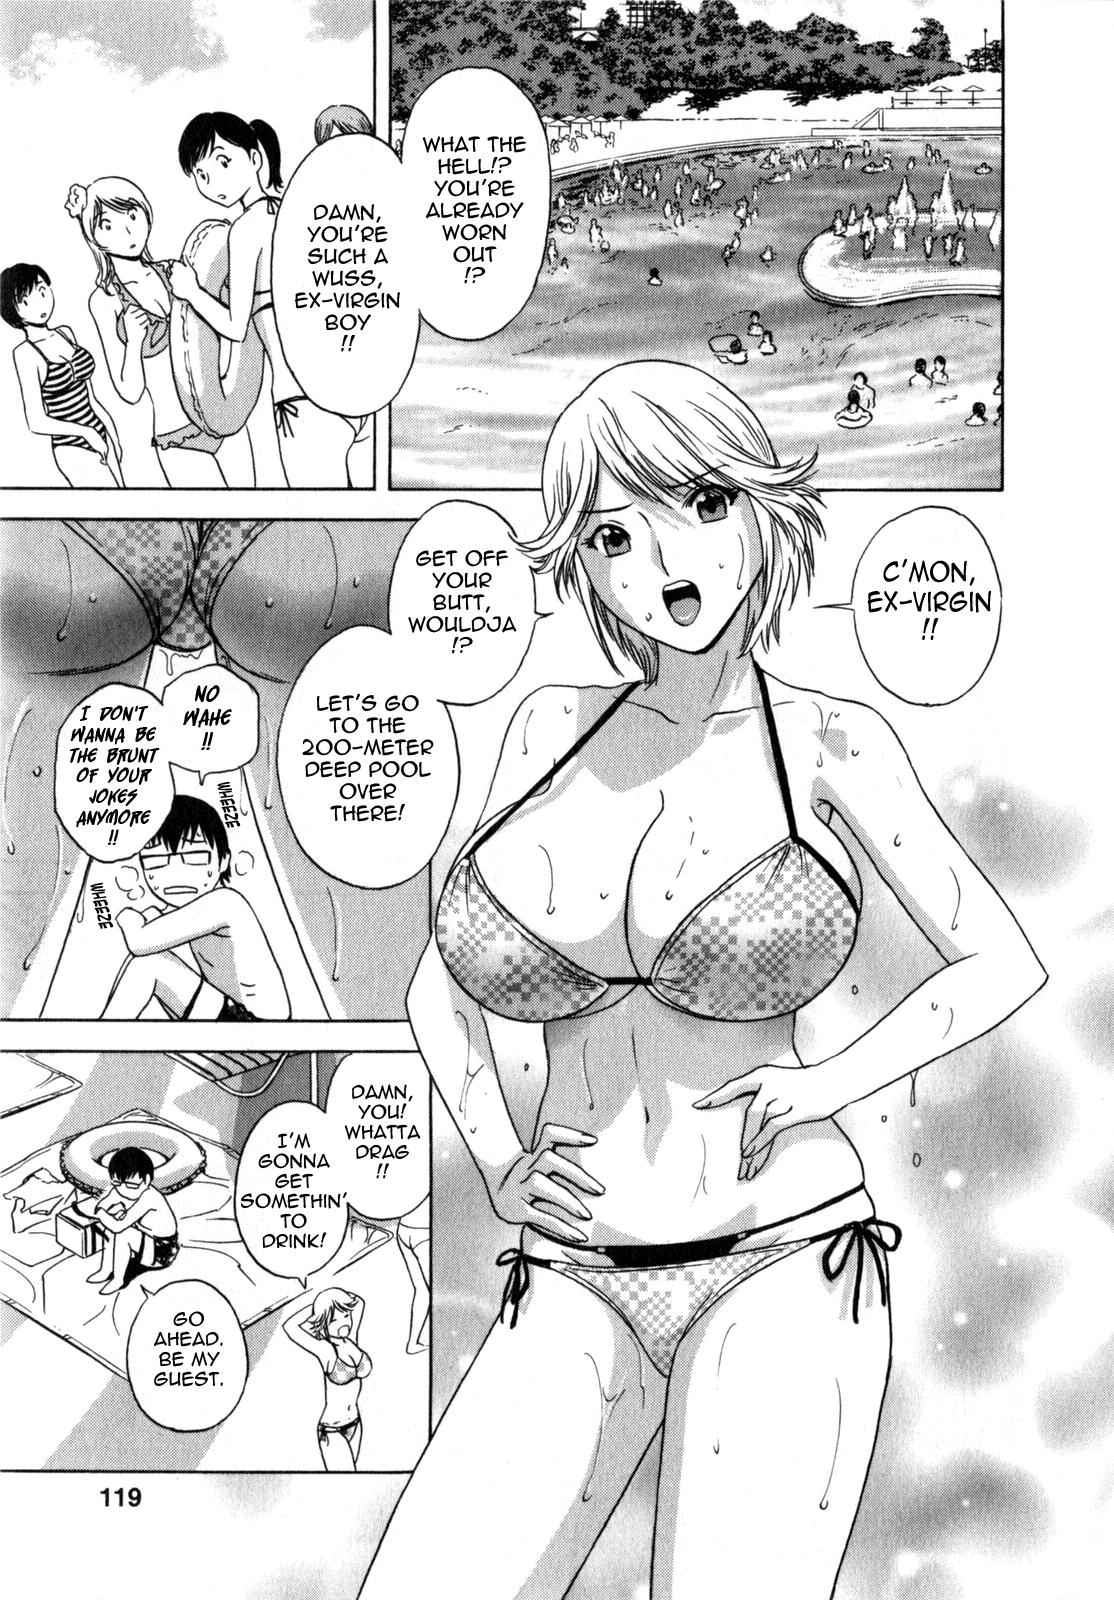 [Hidemaru] Life with Married Women Just Like a Manga 1 - Ch. 1-9 [English] {Tadanohito} 125